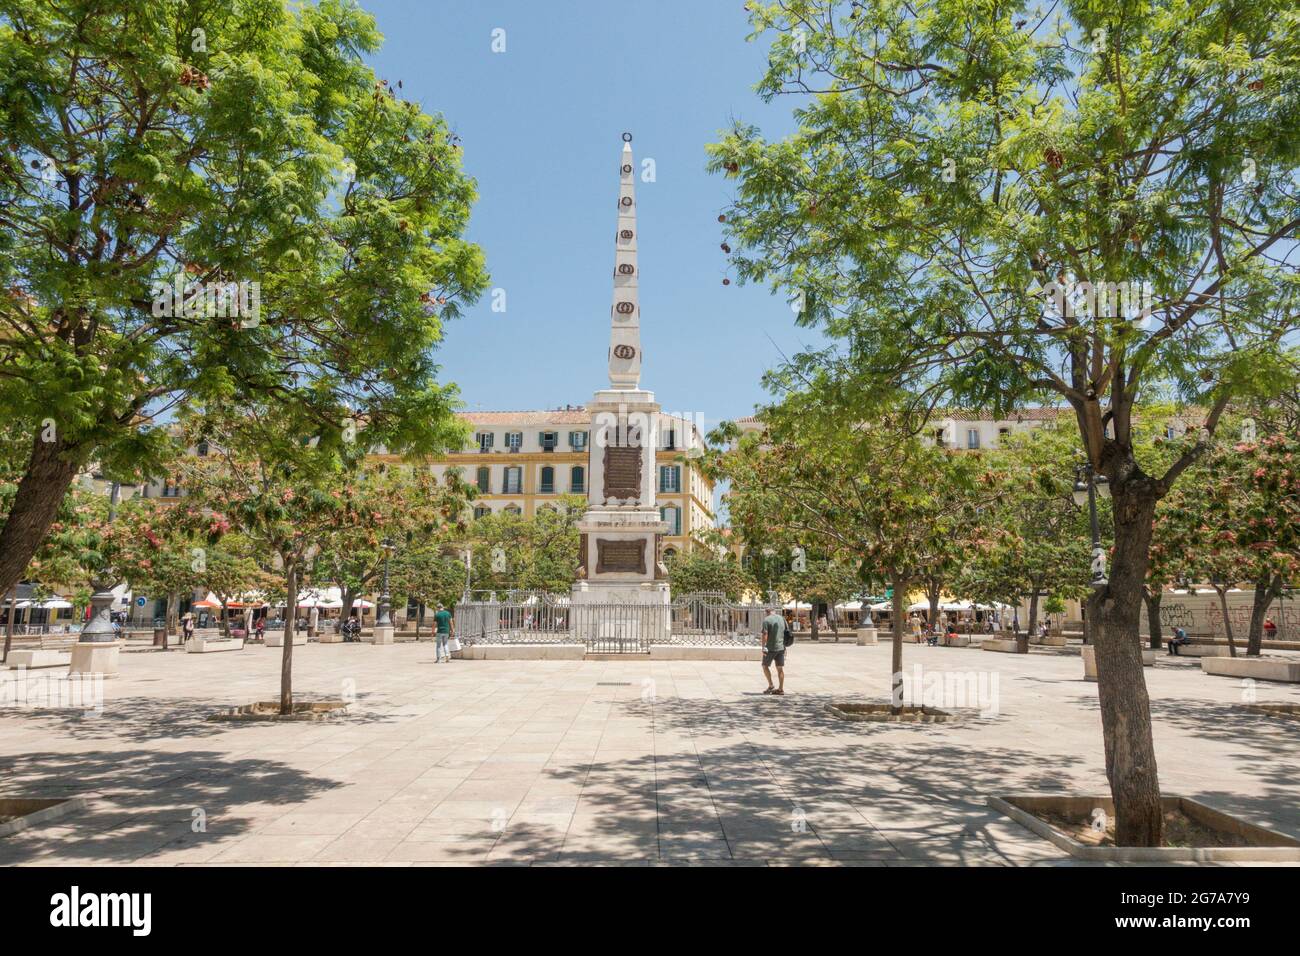 Plaza de la Merced (Mercy Square) Square plaza, Costa del sol, Malaga, Espagne. Banque D'Images